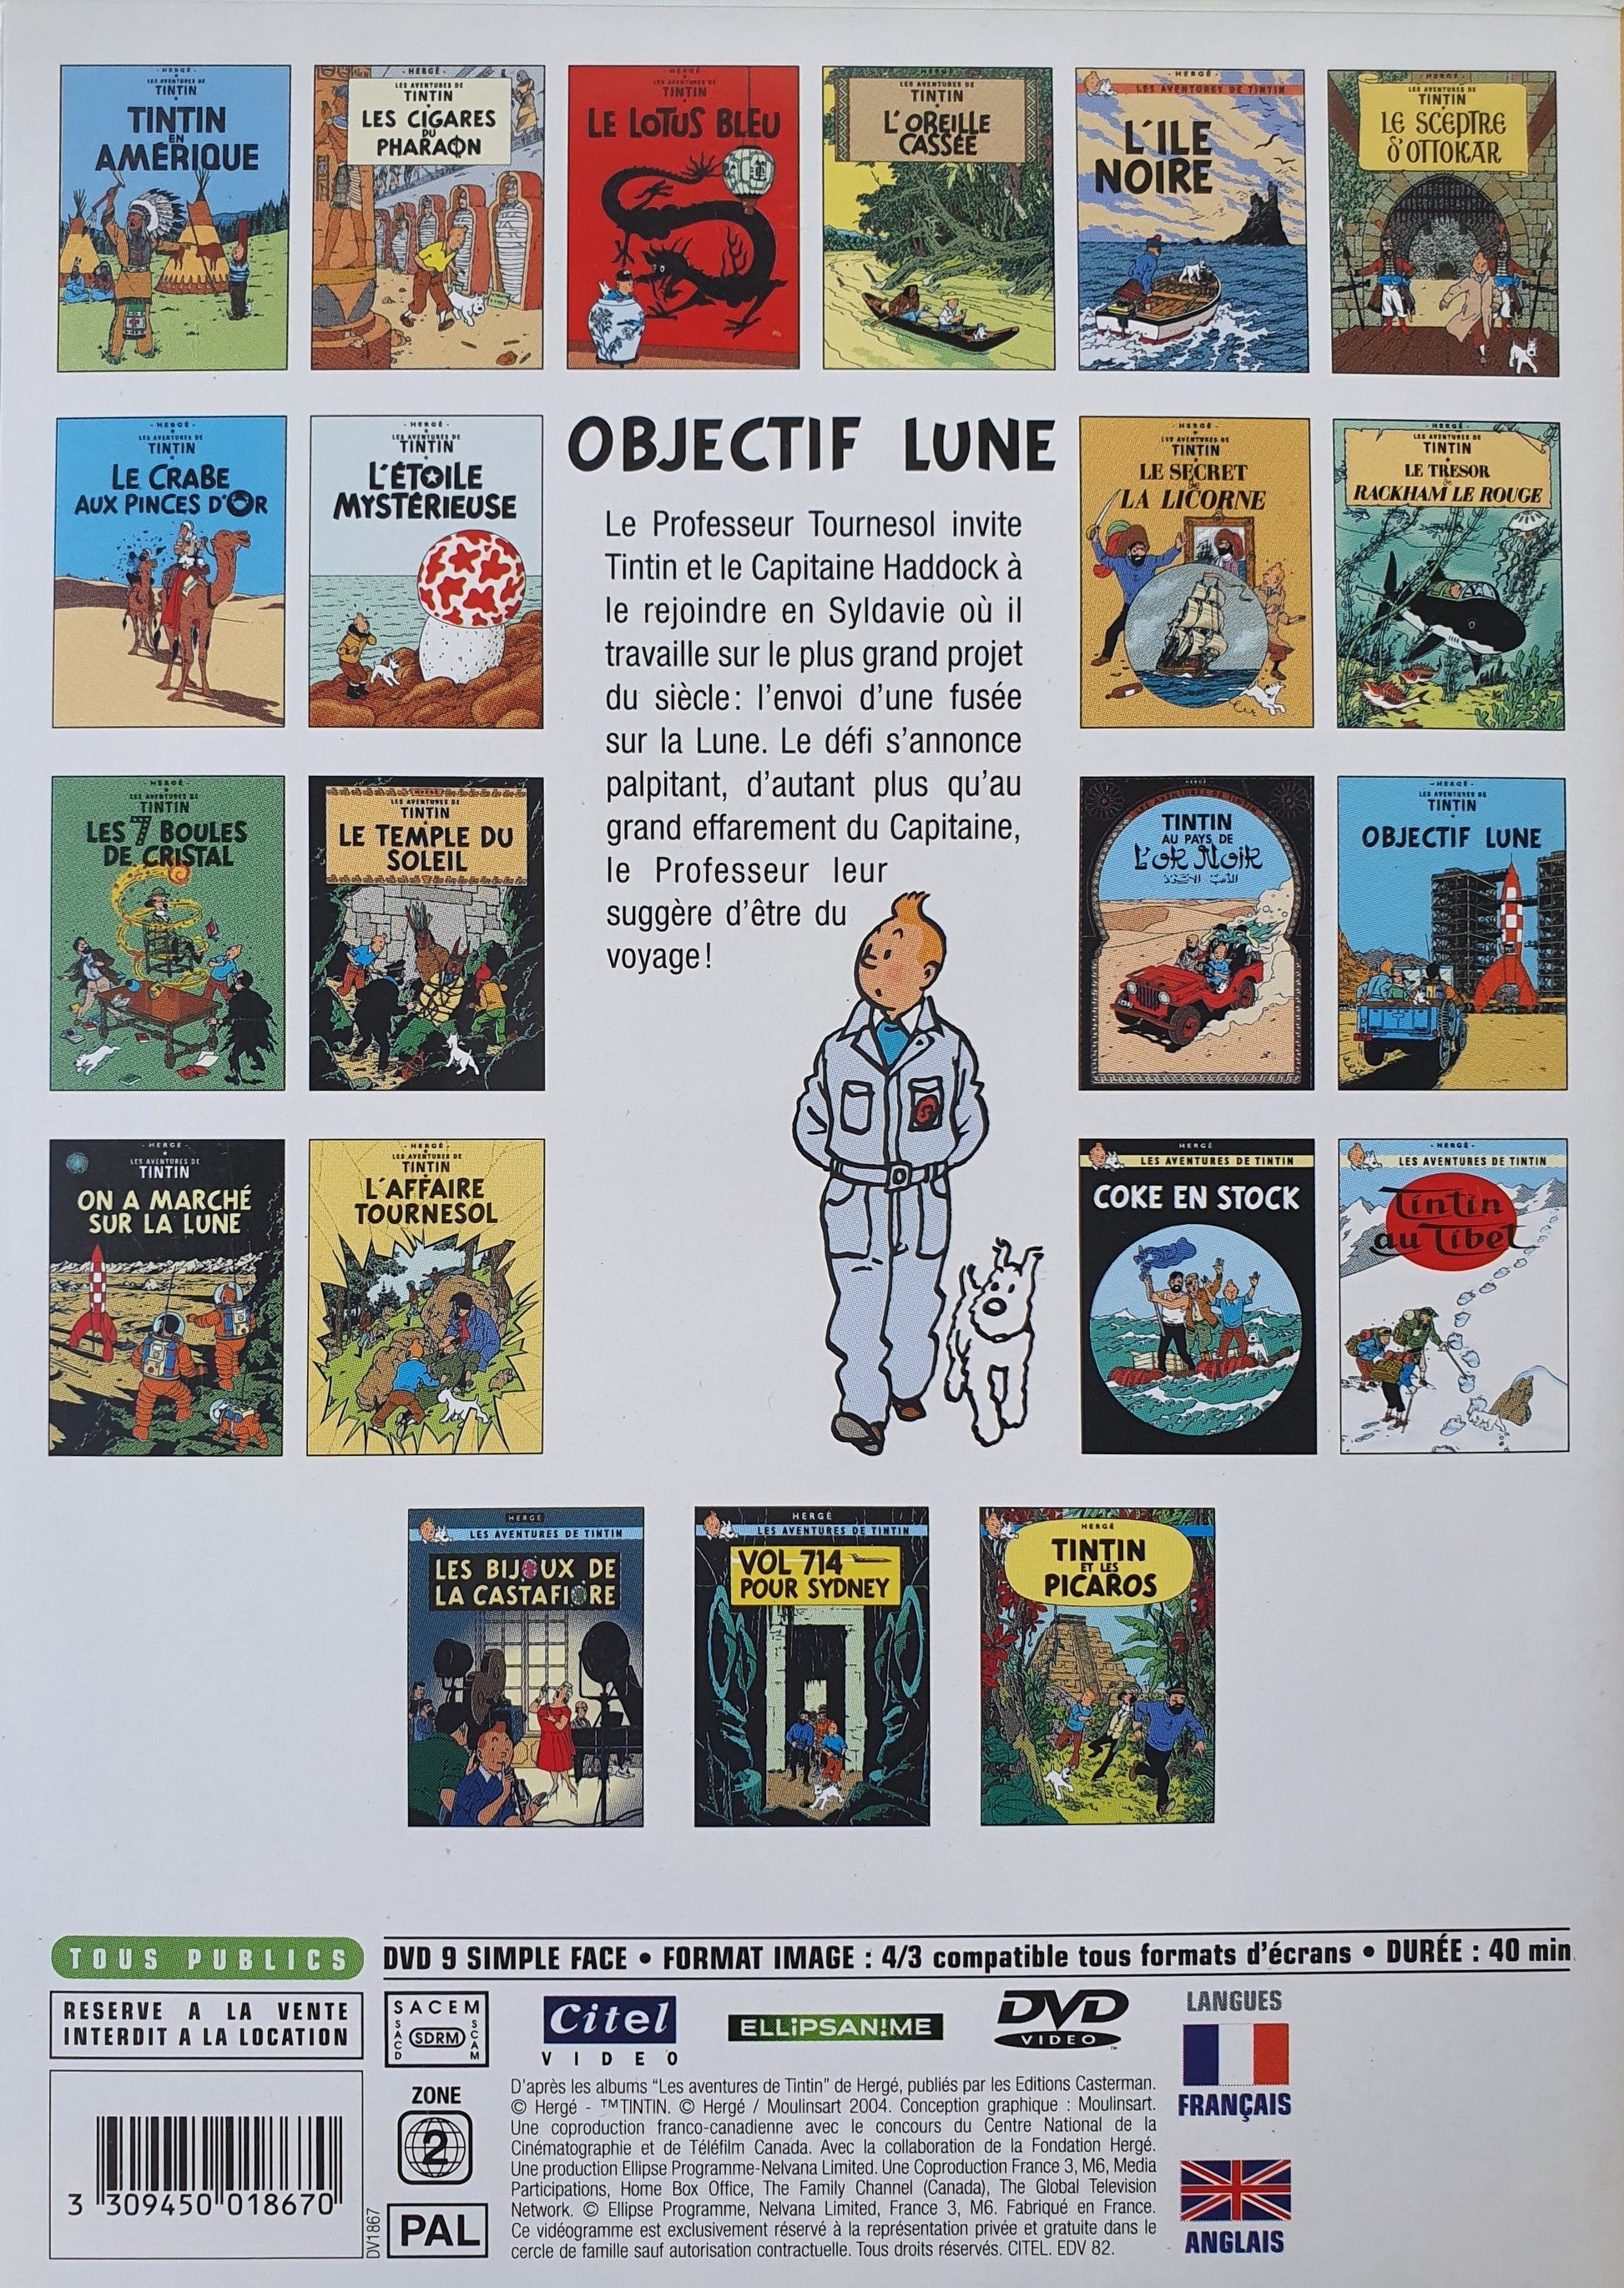 Tintin: Objectif Lune EN, FR Tintin  (4601804914743)